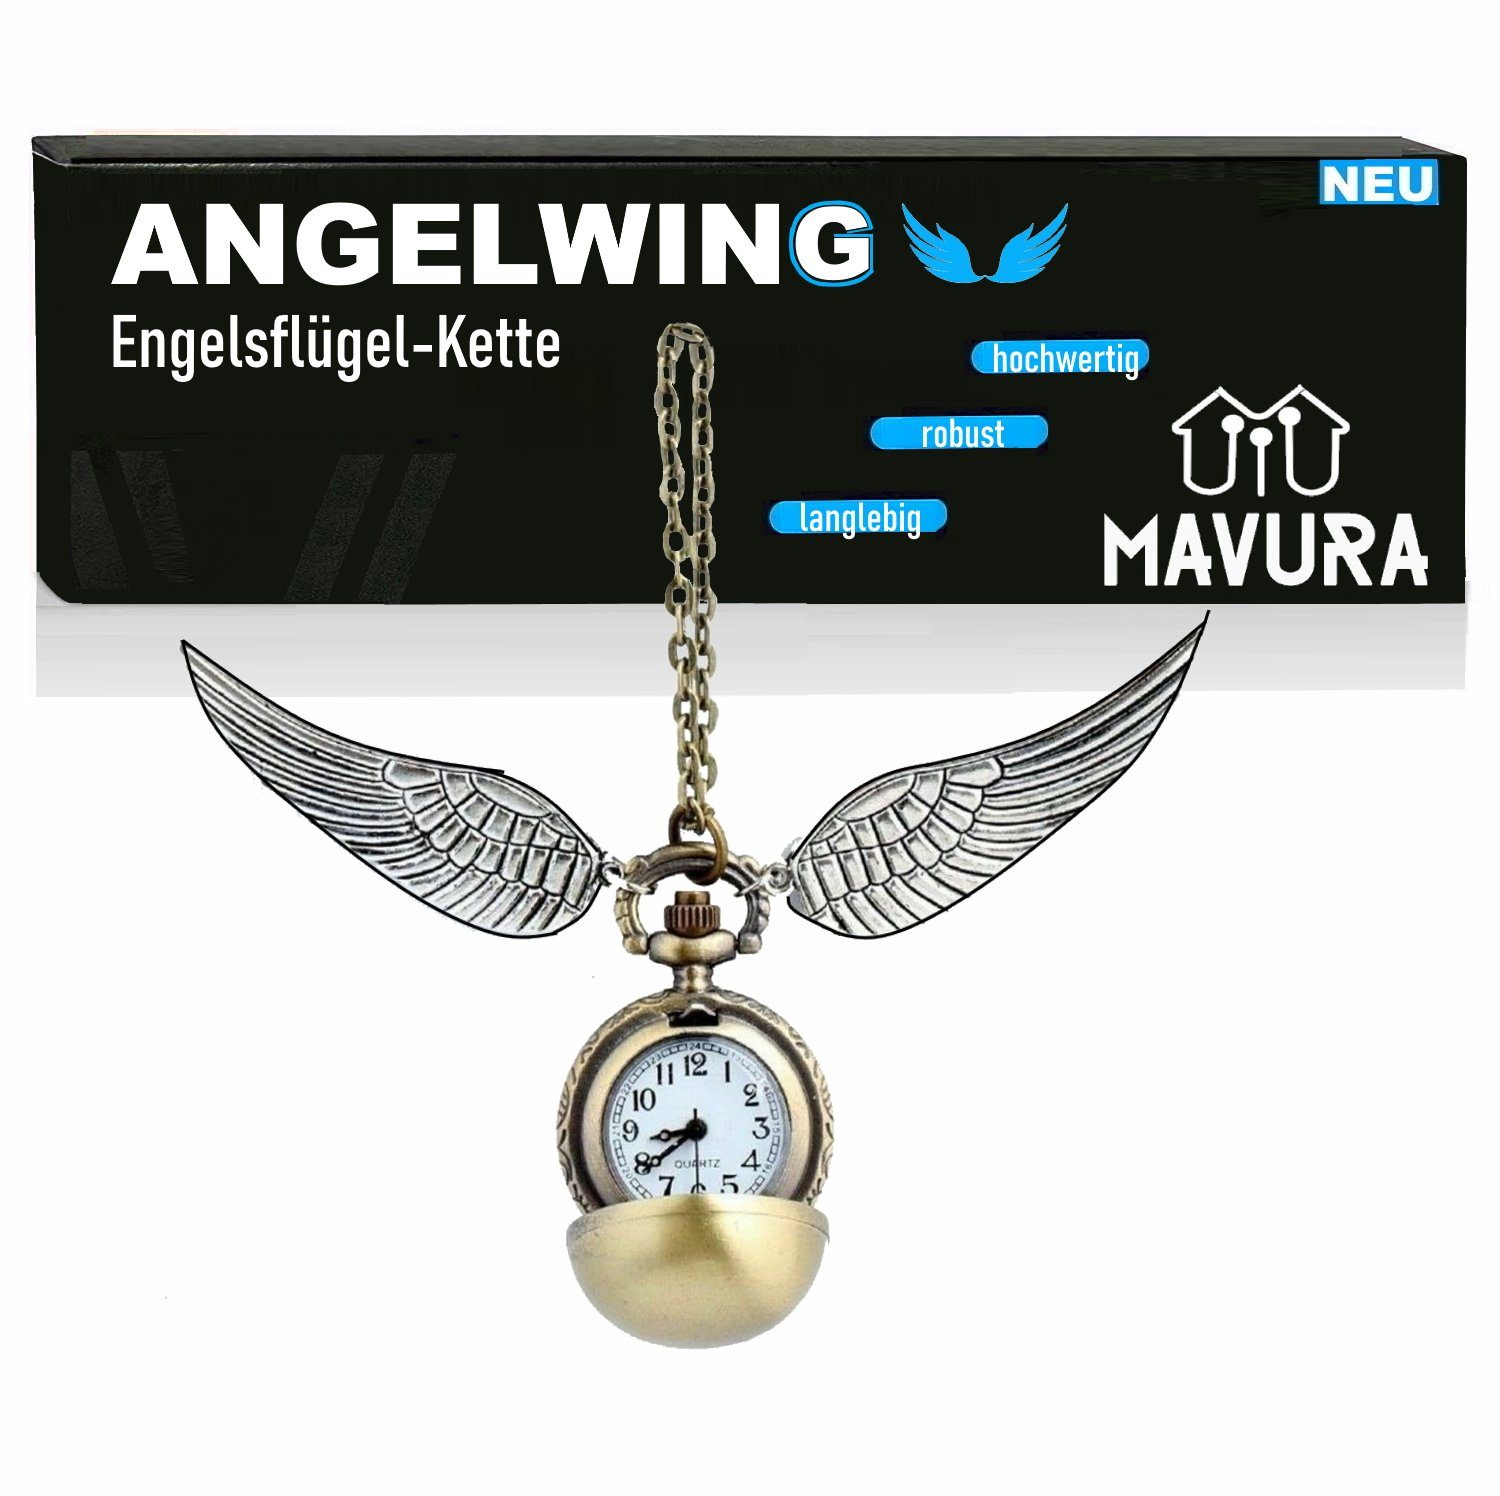 MAVURA Kette mit Anhänger ANGELWING Engels Flügel Kette mit Uhr Anhänger, Flügel Amulett Medaillon Engelsflügel Gold